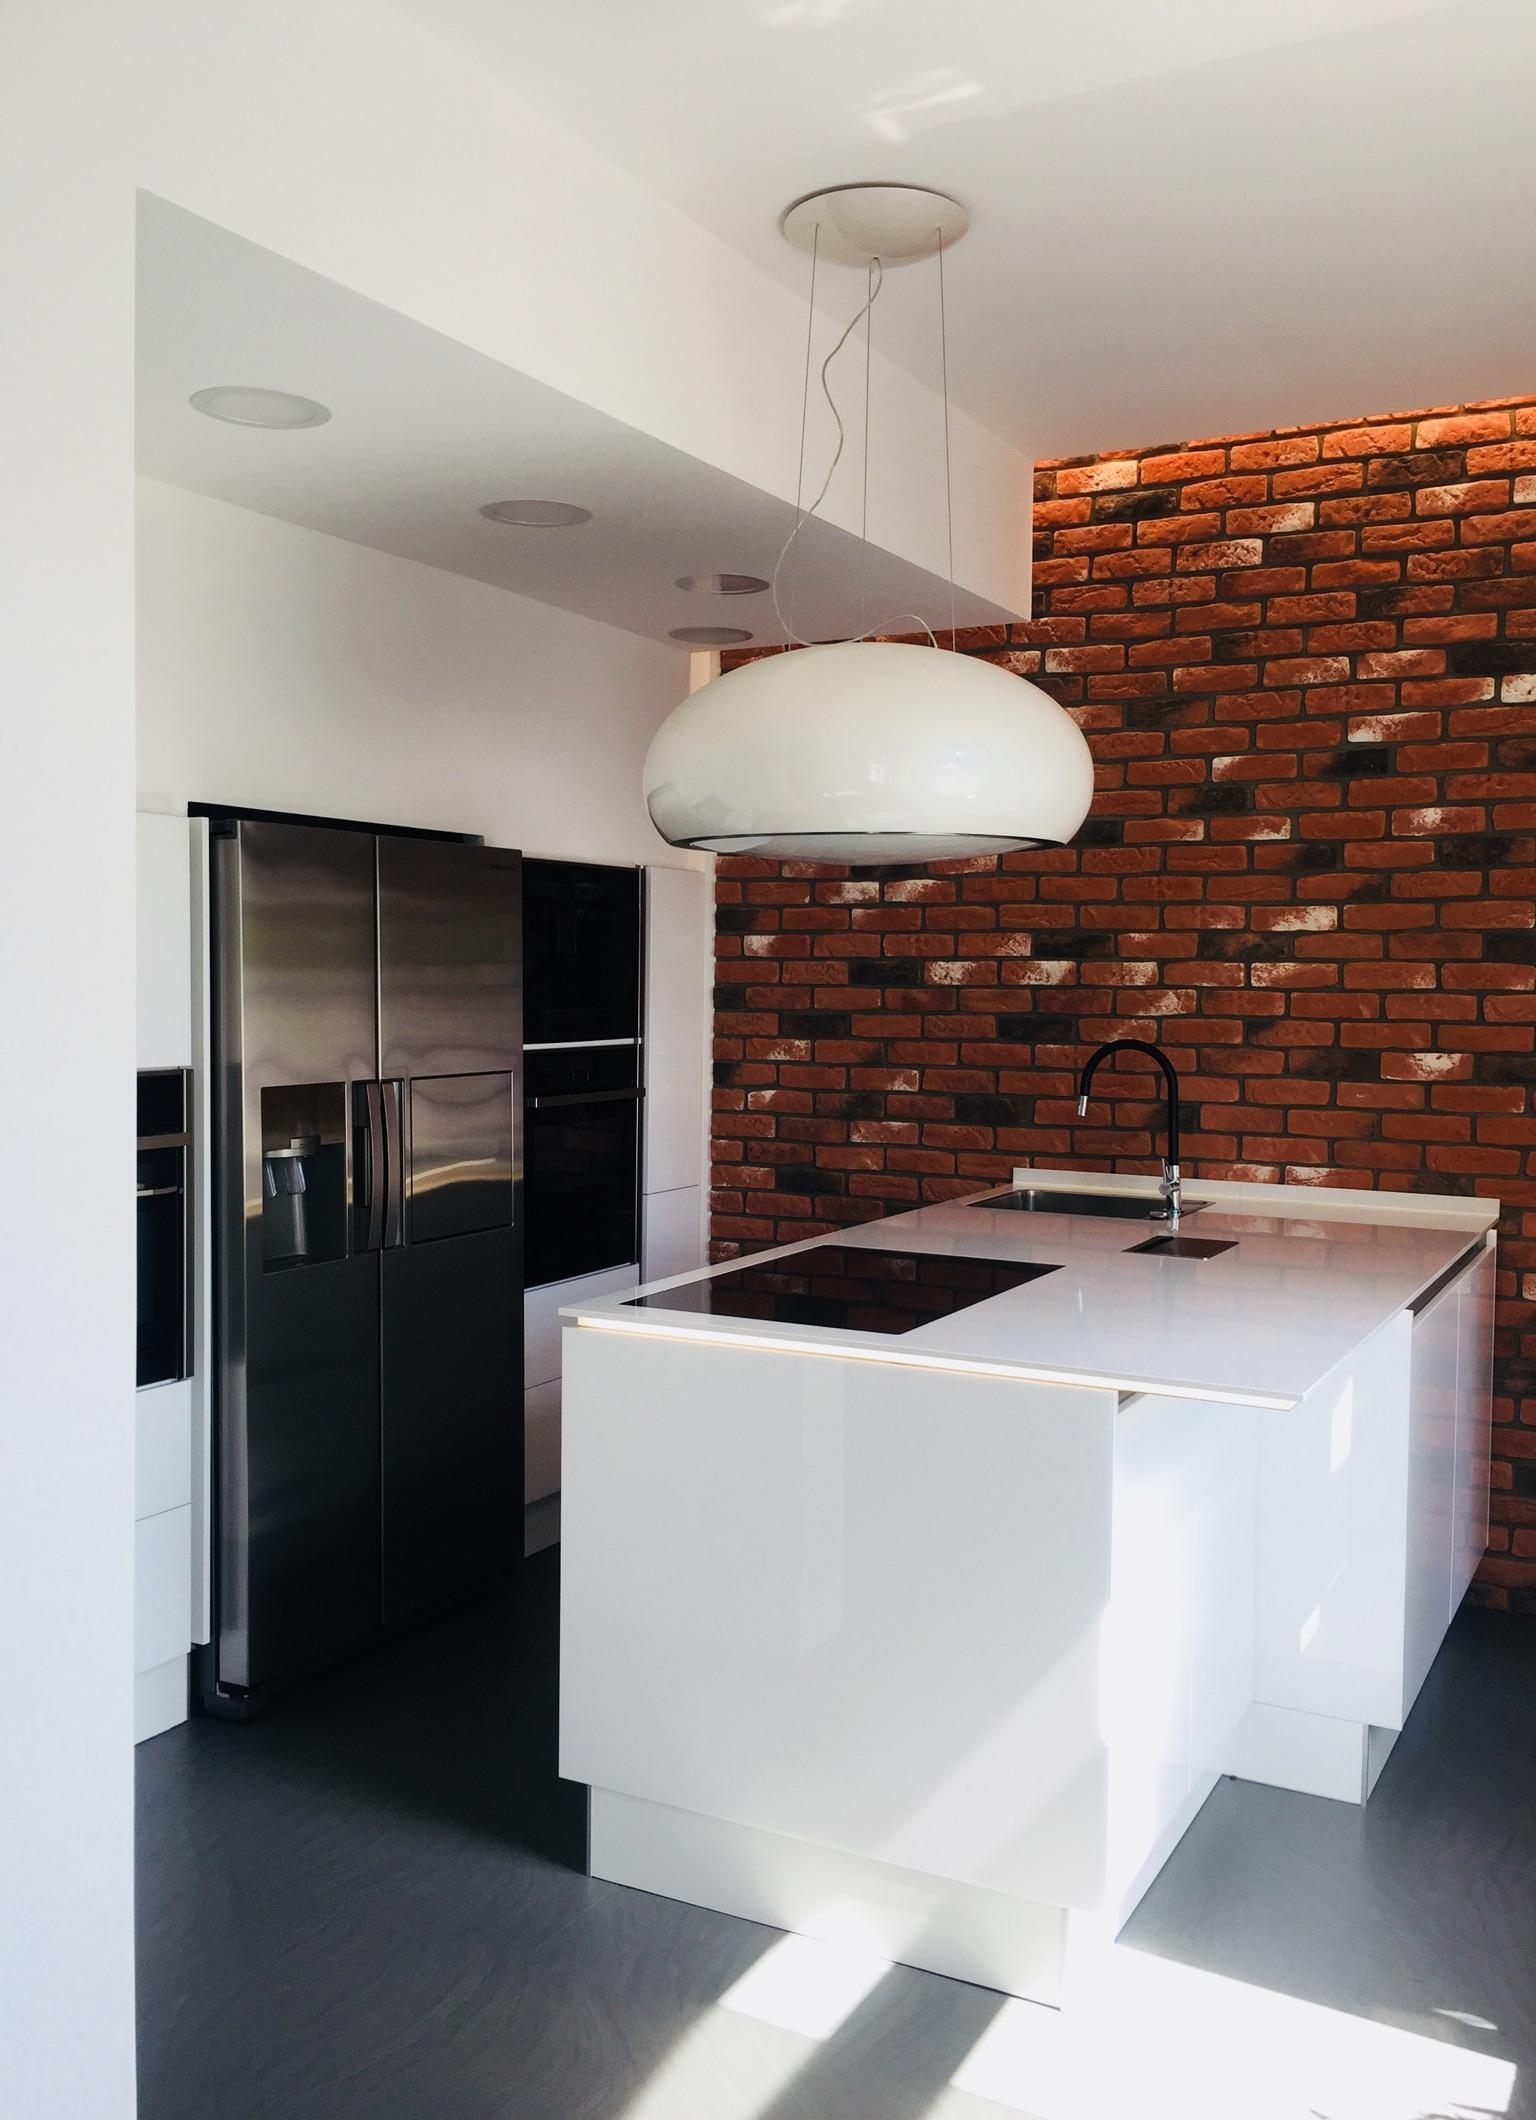 #livingchallenge #küche #minimalistic #bricks #modern #white #puristic